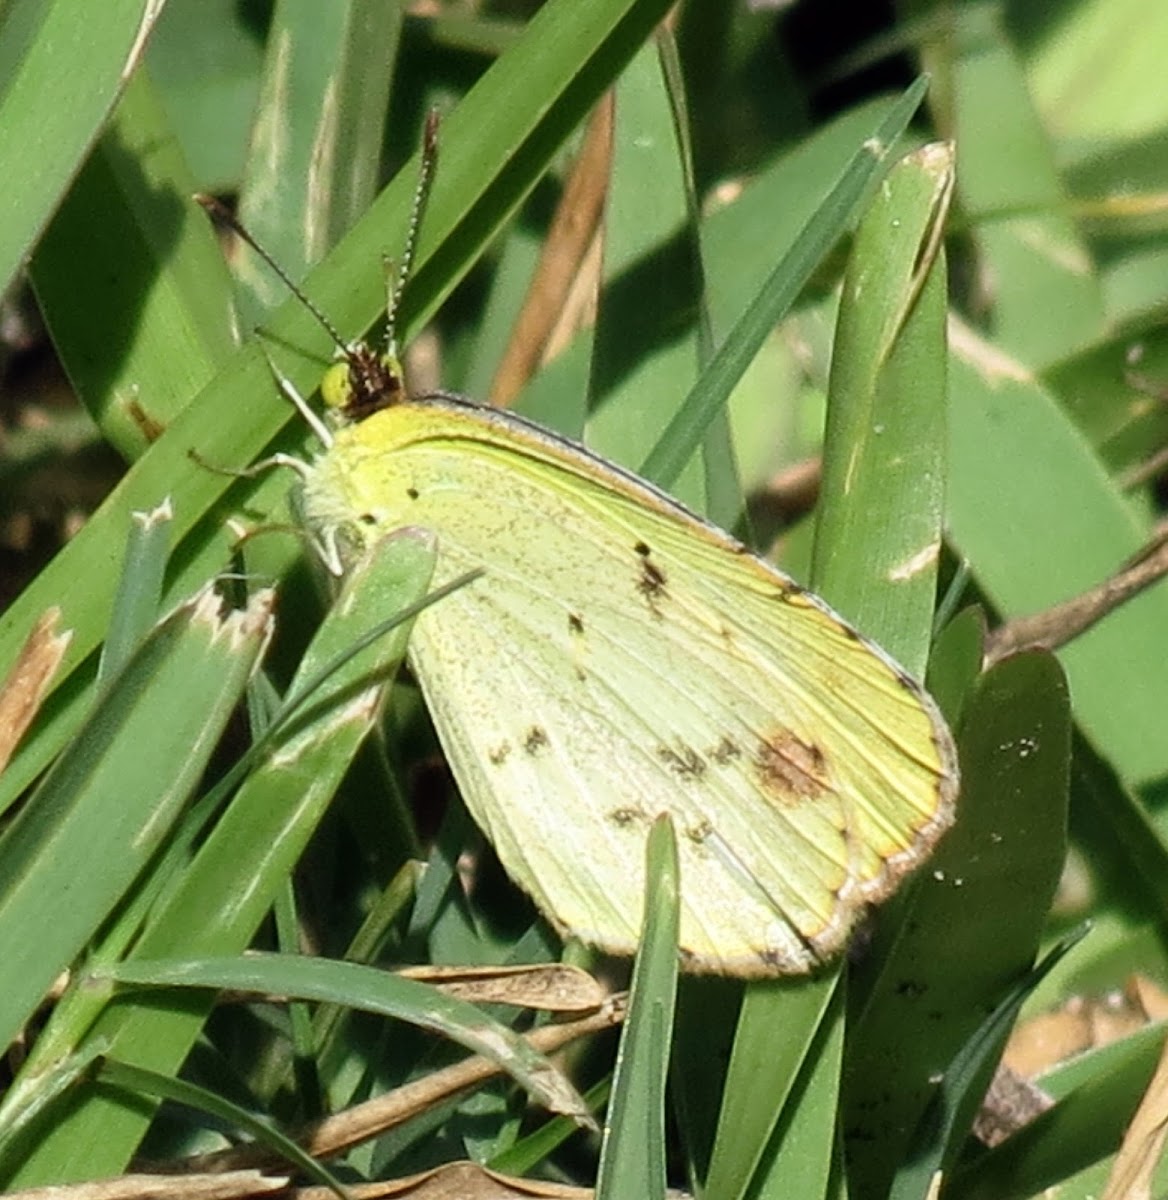 Little yellow butterfly